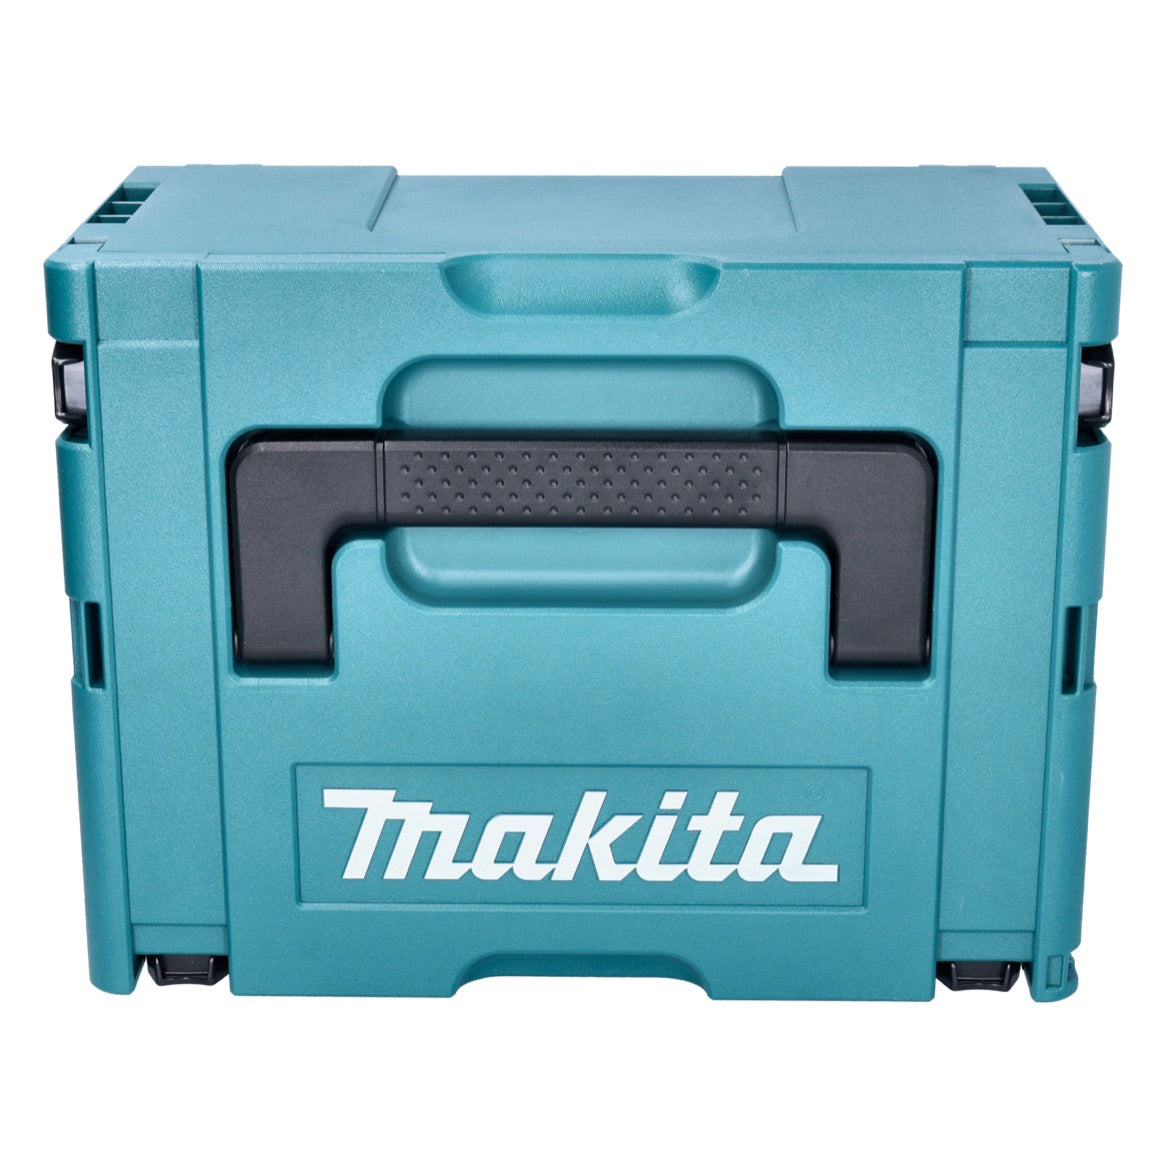 Makita DJV 185 ZJ Akku Pendelhubstichsäge 18 V Brushless + 3 tlg. Stichsägeblatt Set + Makpac - ohne Akku, ohne Ladegerät - Toolbrothers